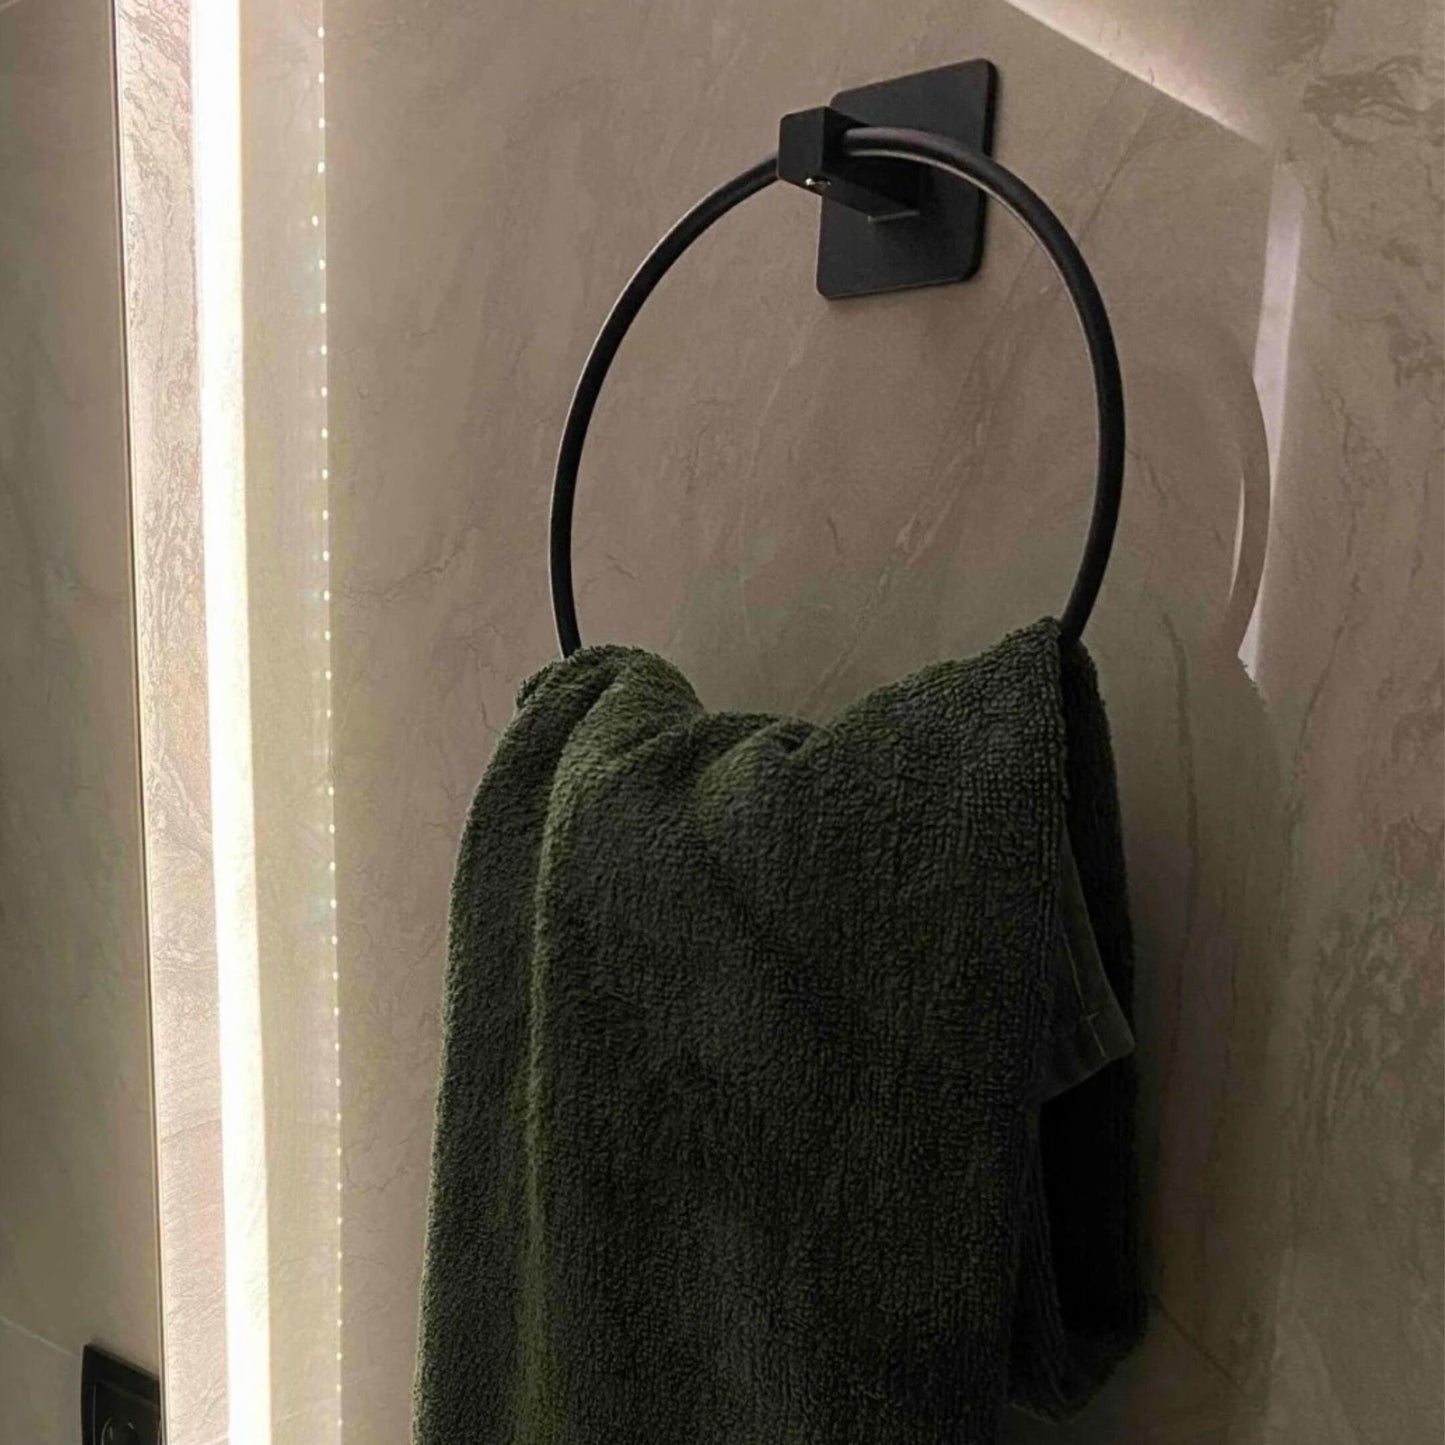 Adhesive Matt Black Round Towel Ring, Bath Towel Rail, Bathroom Accessories, Hand Towel Rail Holder, Contemporary Hotel Style - 16x16cm - Babila Home